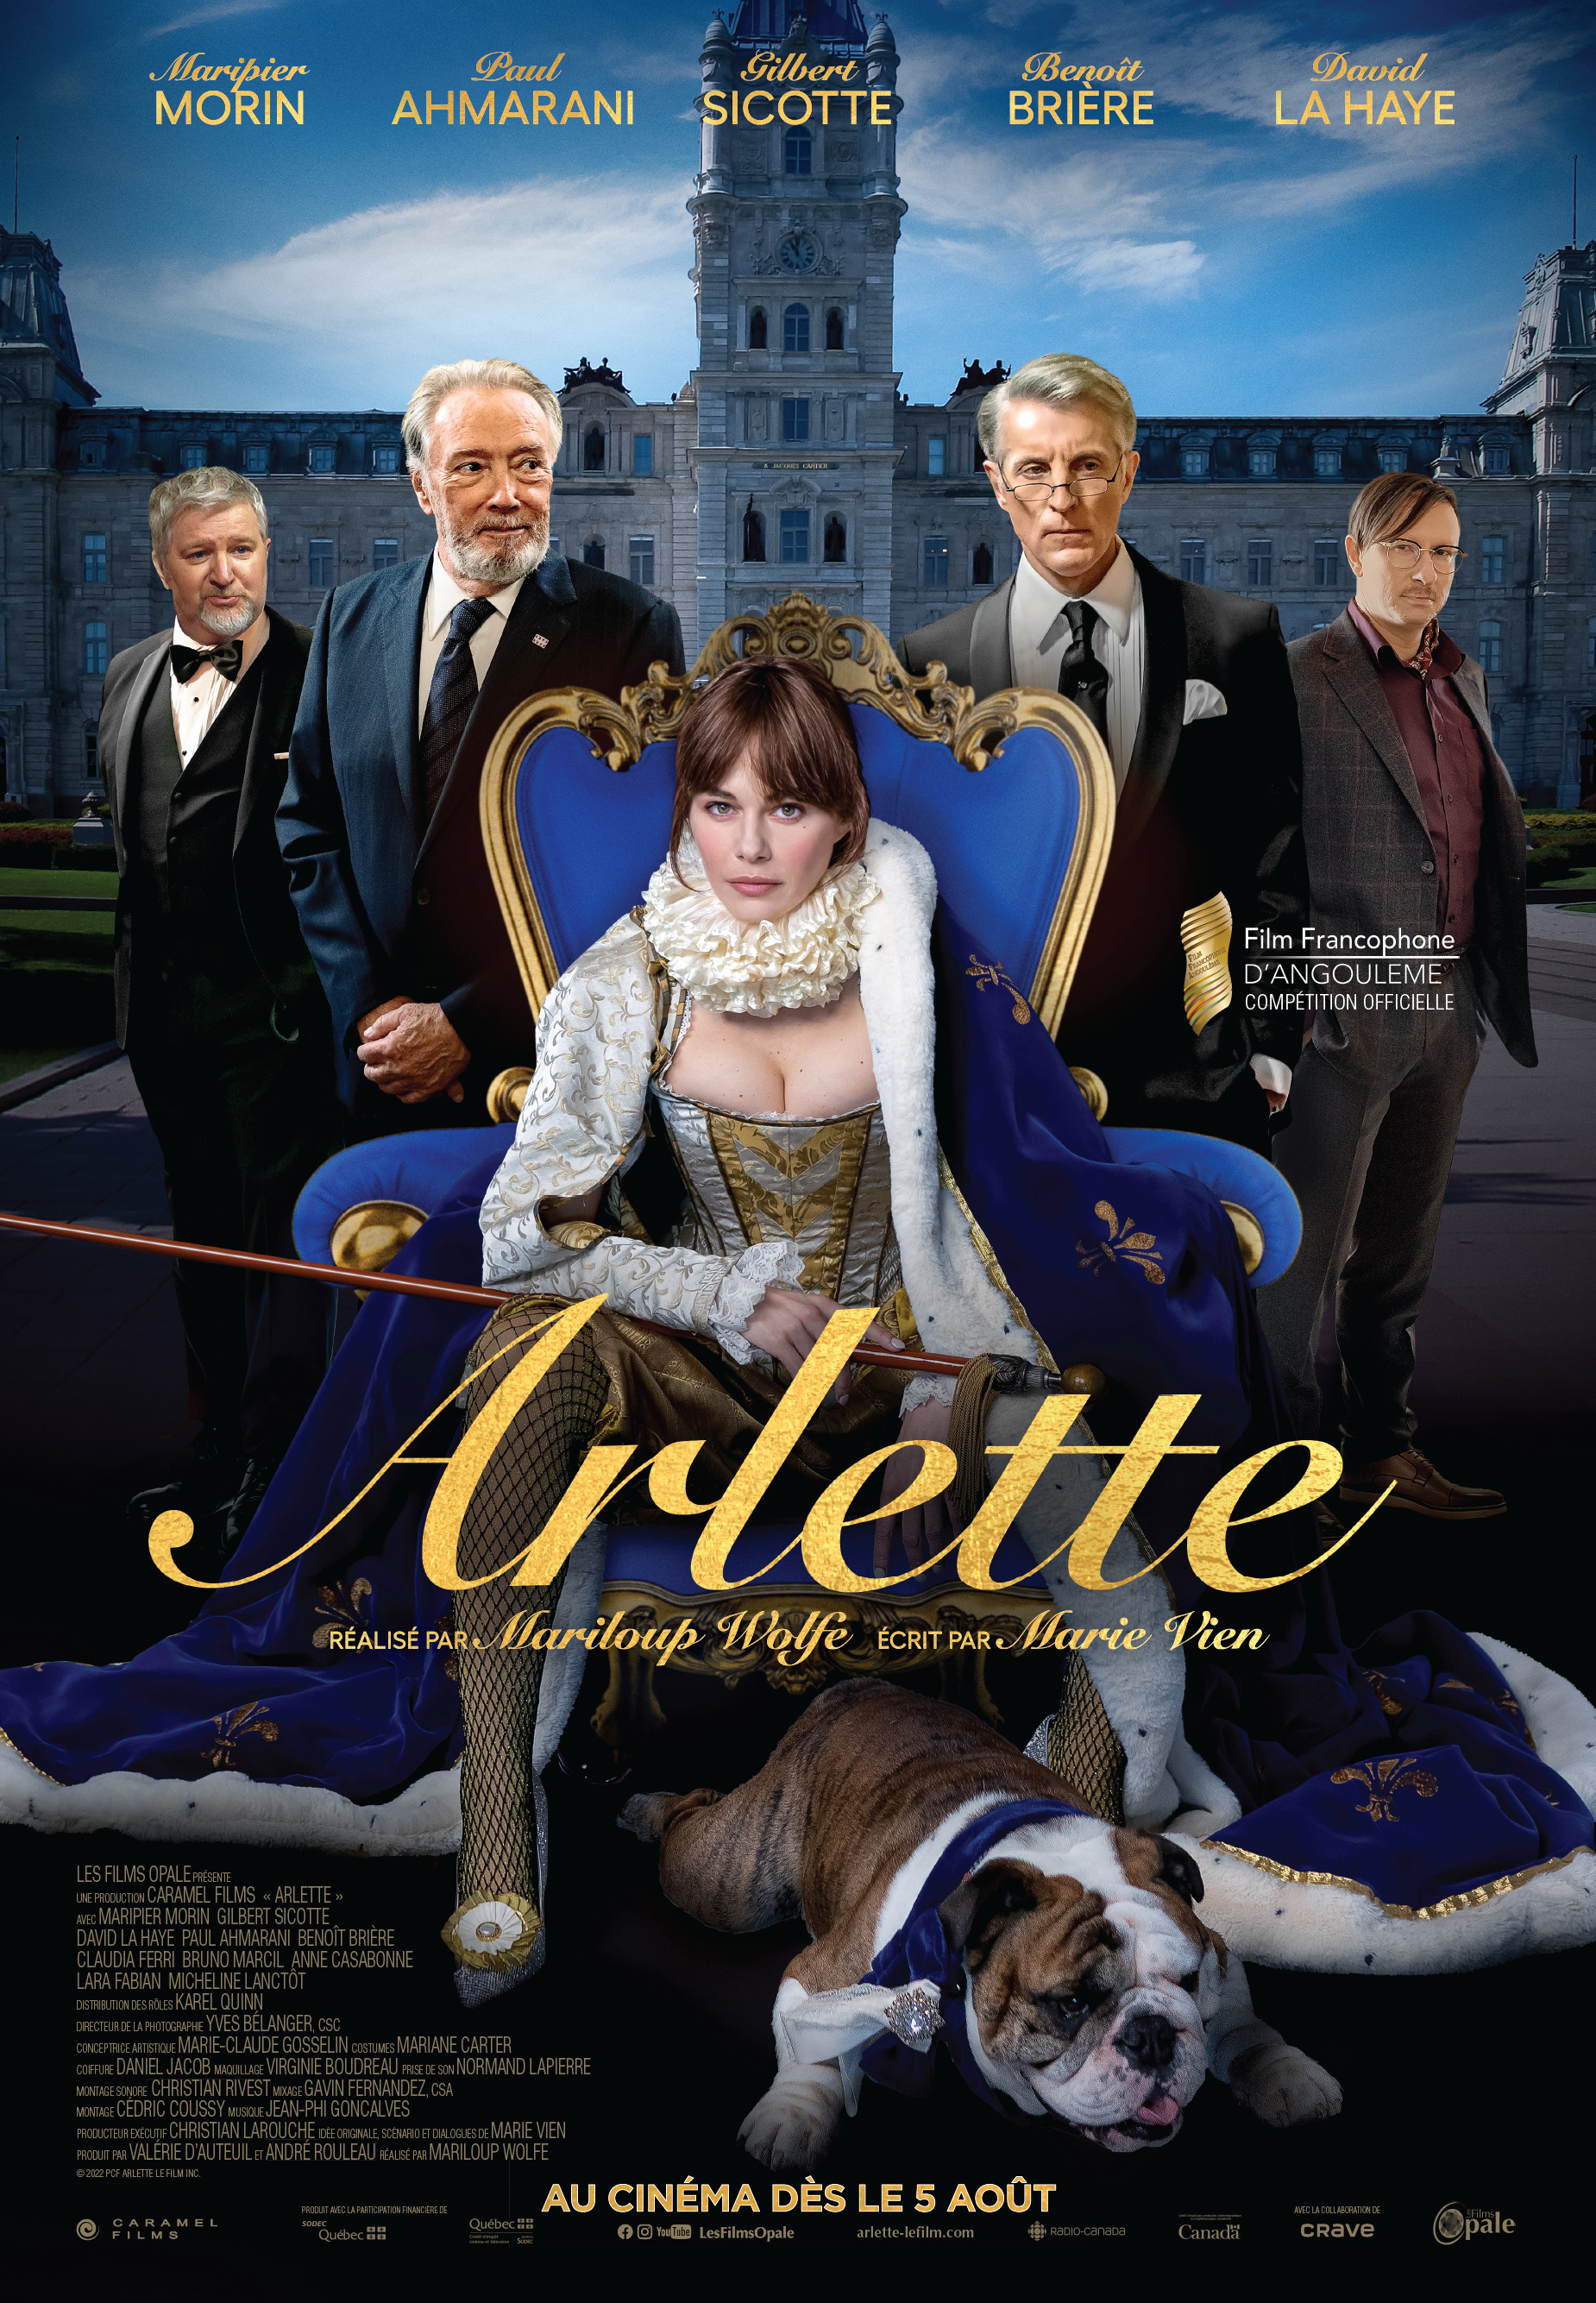 Mega Sized Movie Poster Image for Arlette! 